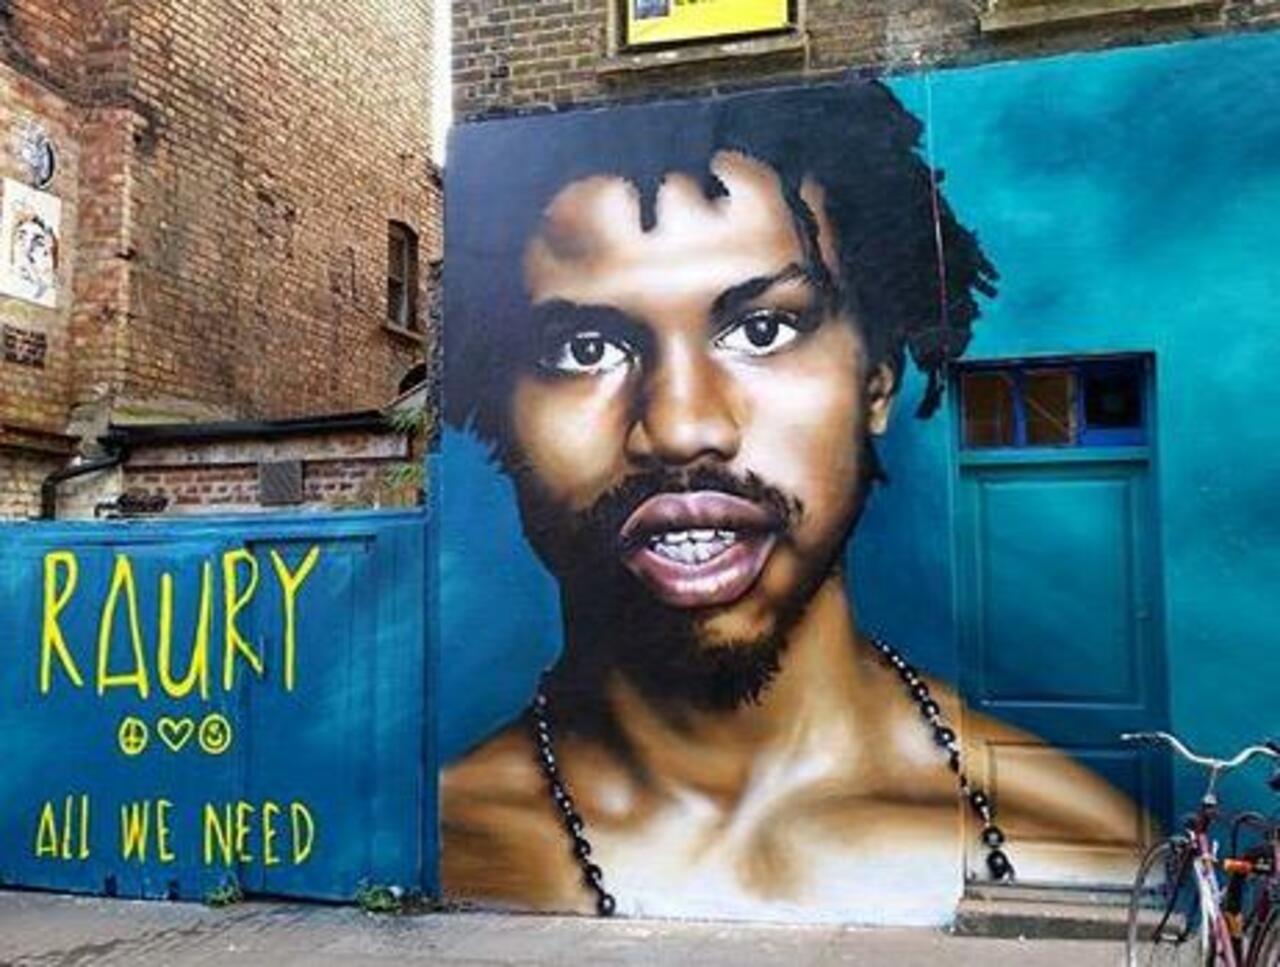 New Street Art of Raury by Olliver Switch in Brick Lane 

#art #graffiti #mural #streetart http://t.co/Rnog4MAOVb